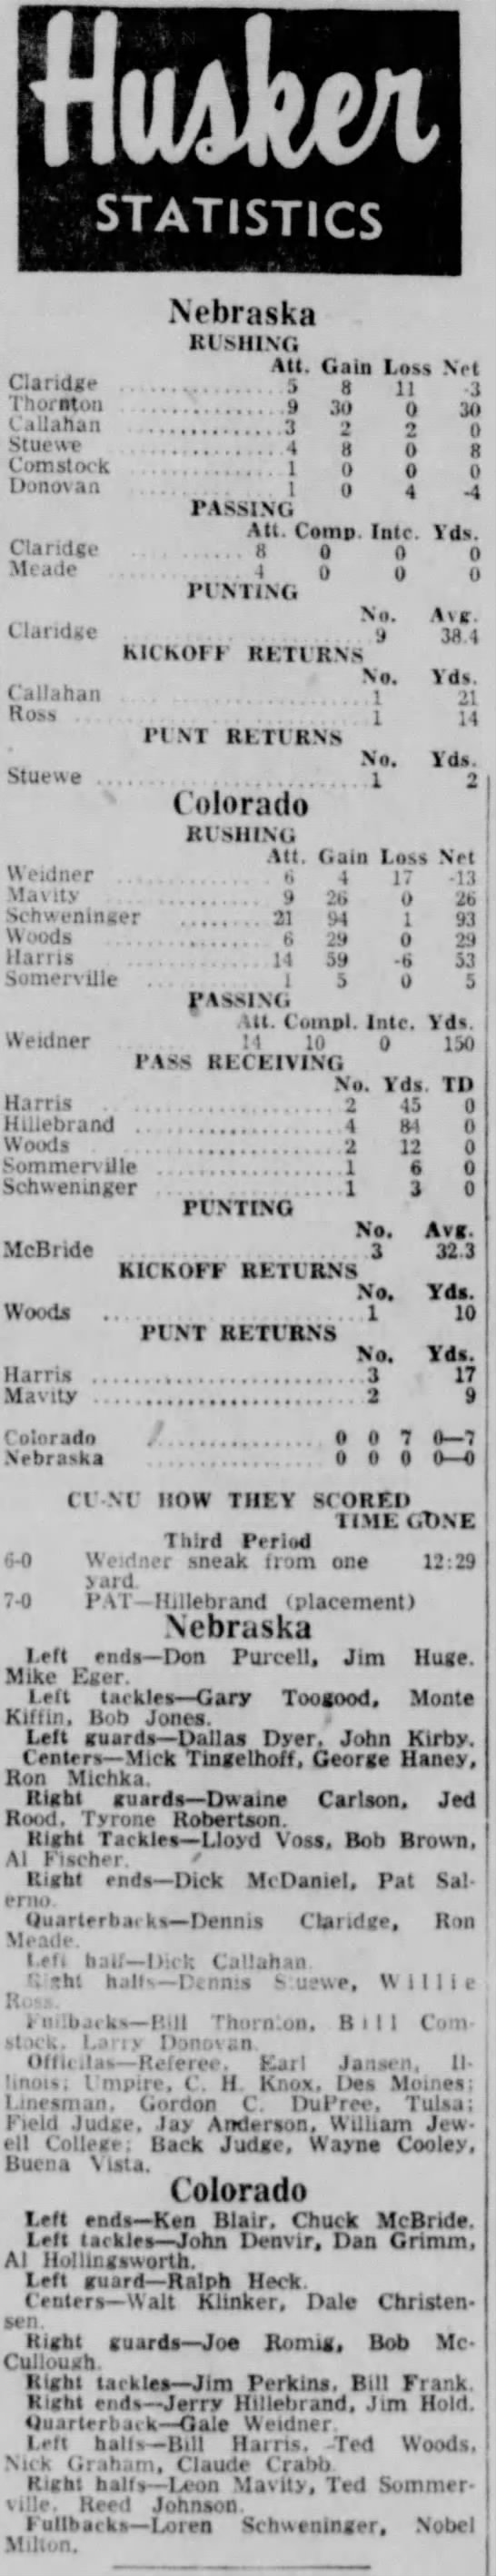 1961 Nebraska-Colorado game stats - 